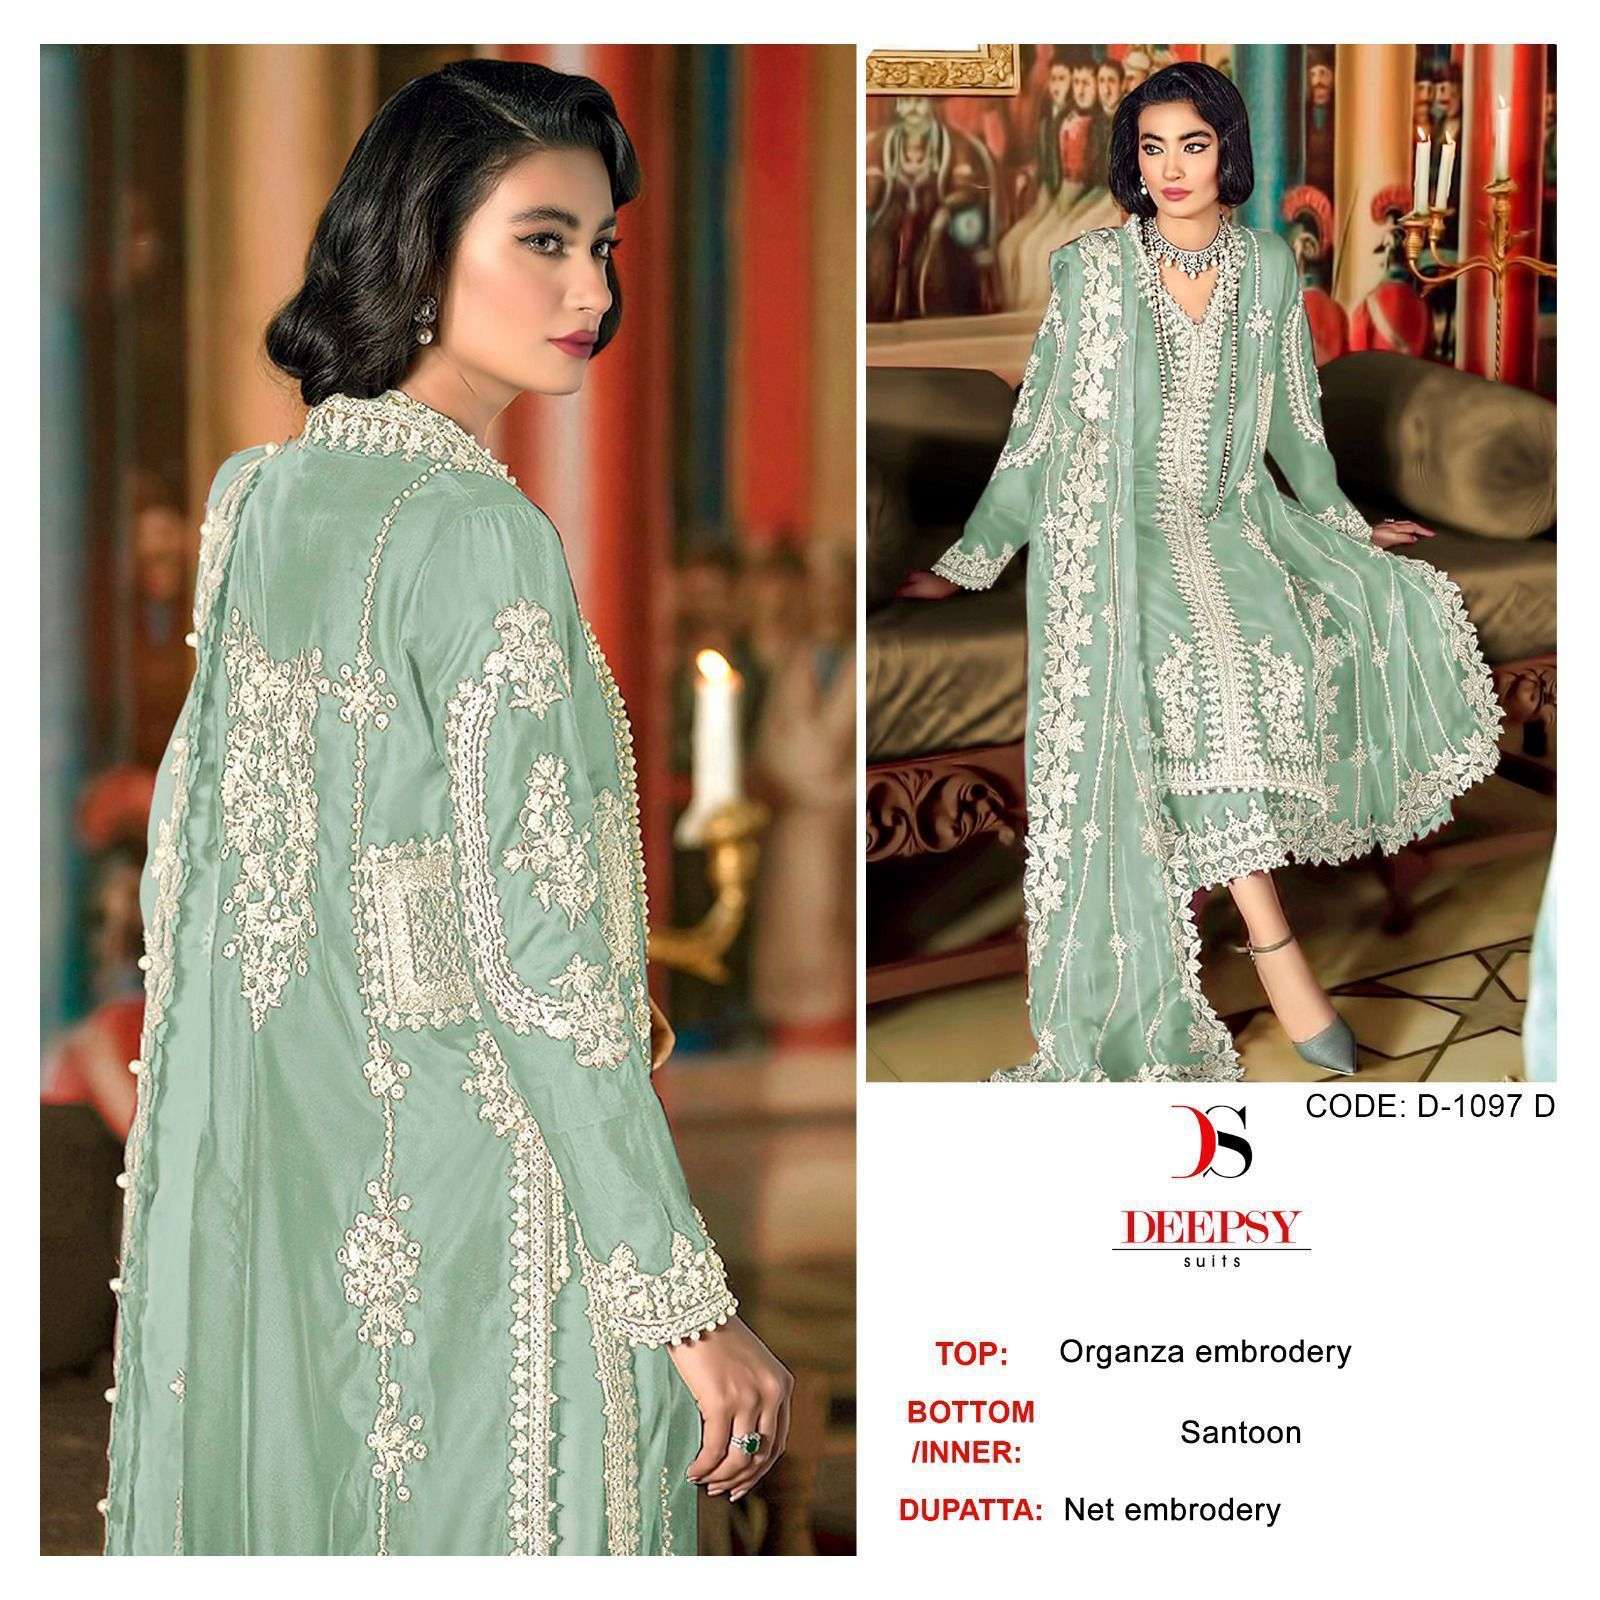 deepsy suits 1097 colour series latest designer partywear salwar kameez wholesaler surat gujarat